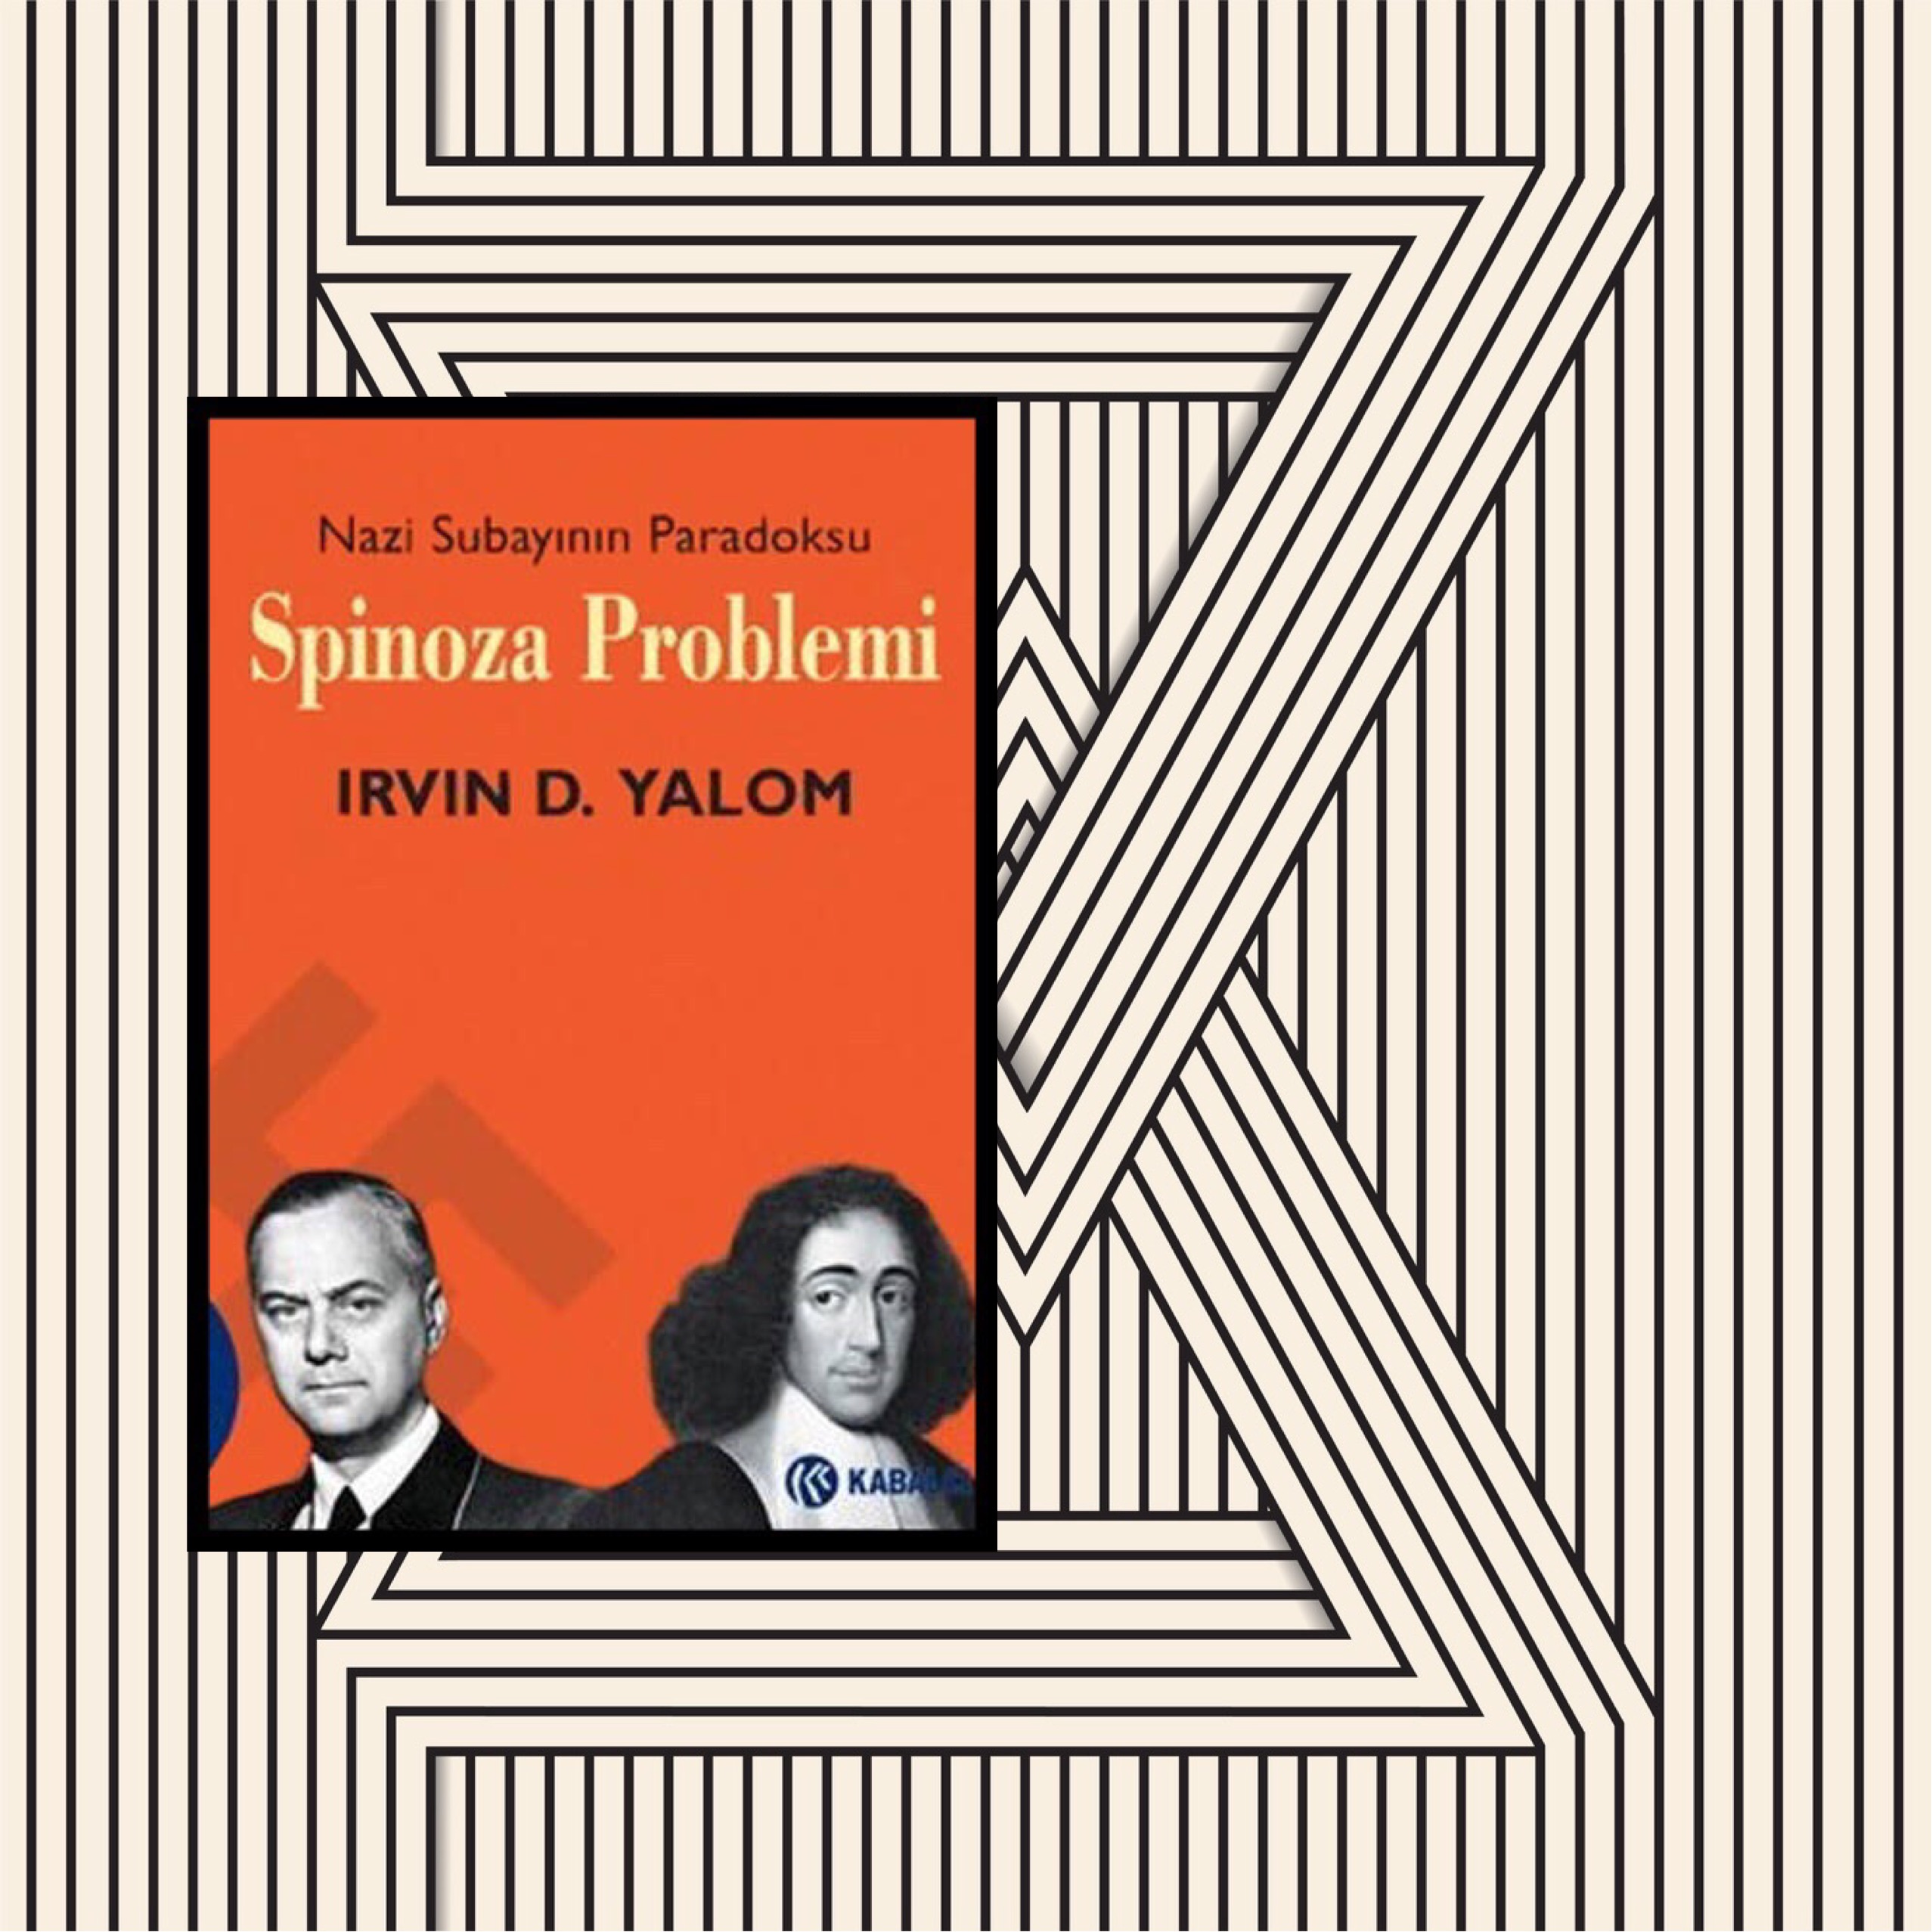 Nazi Subayının Paradoksu | Spinoza Problem | Irvin D. Yalom